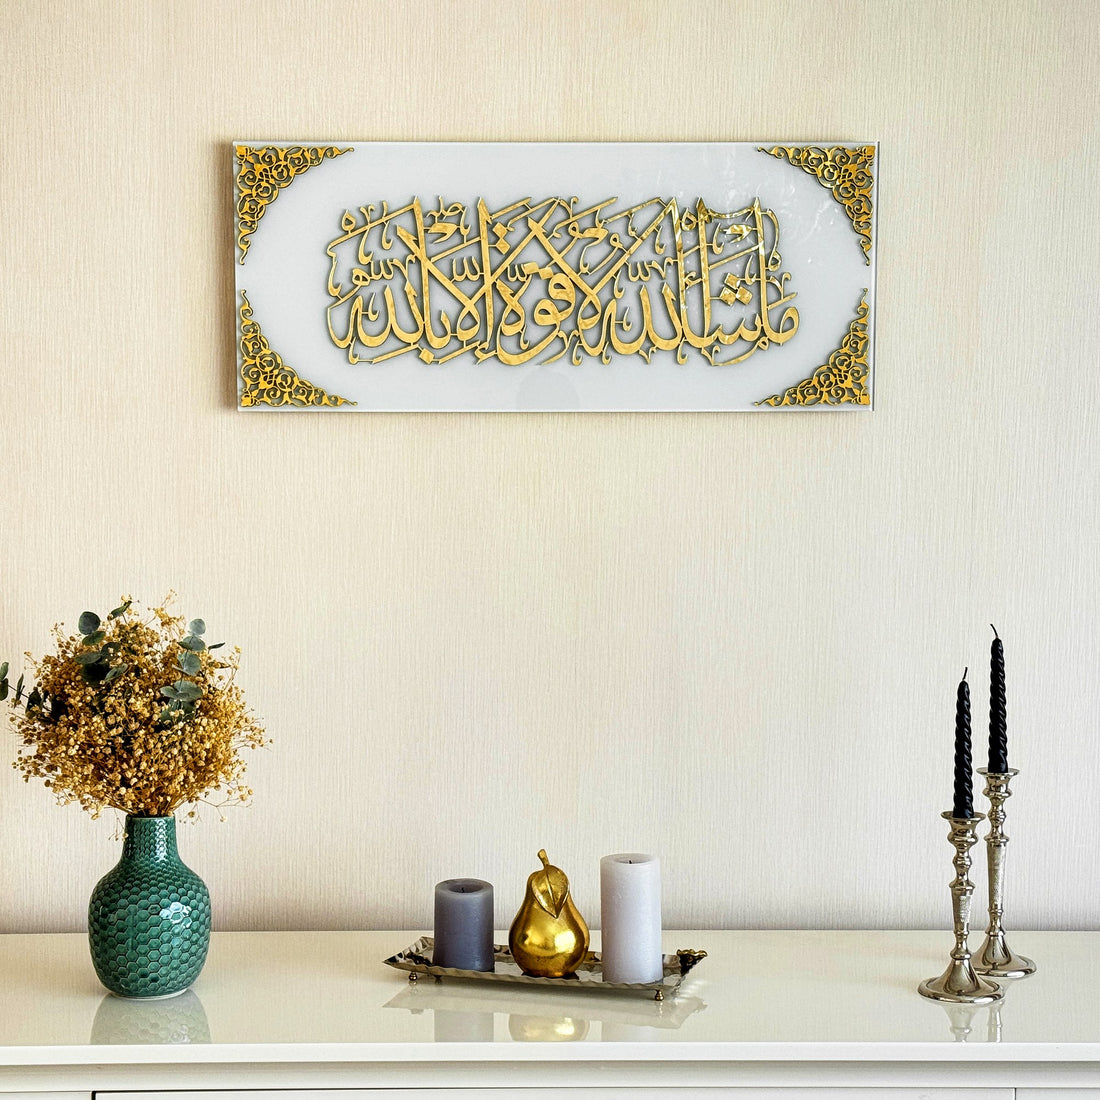 Mashallah La Quwwata illa Bi-llahi Glass Muslim Wall Art - Arabic Calligraphy